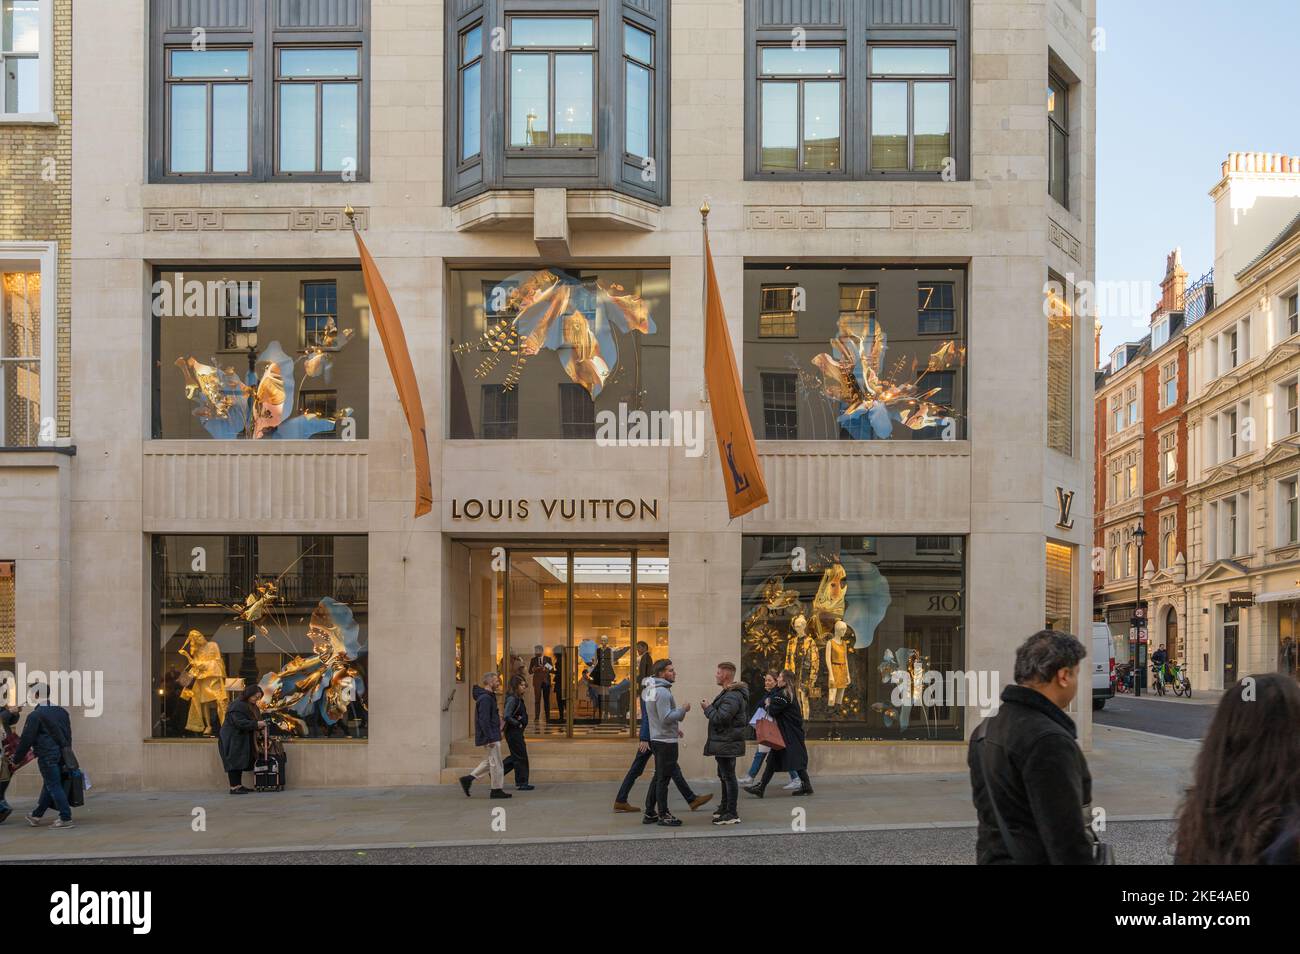 Louis Vuitton London Bond Street Store Exterior - Picture of Louis Vuitton,  London - Tripadvisor